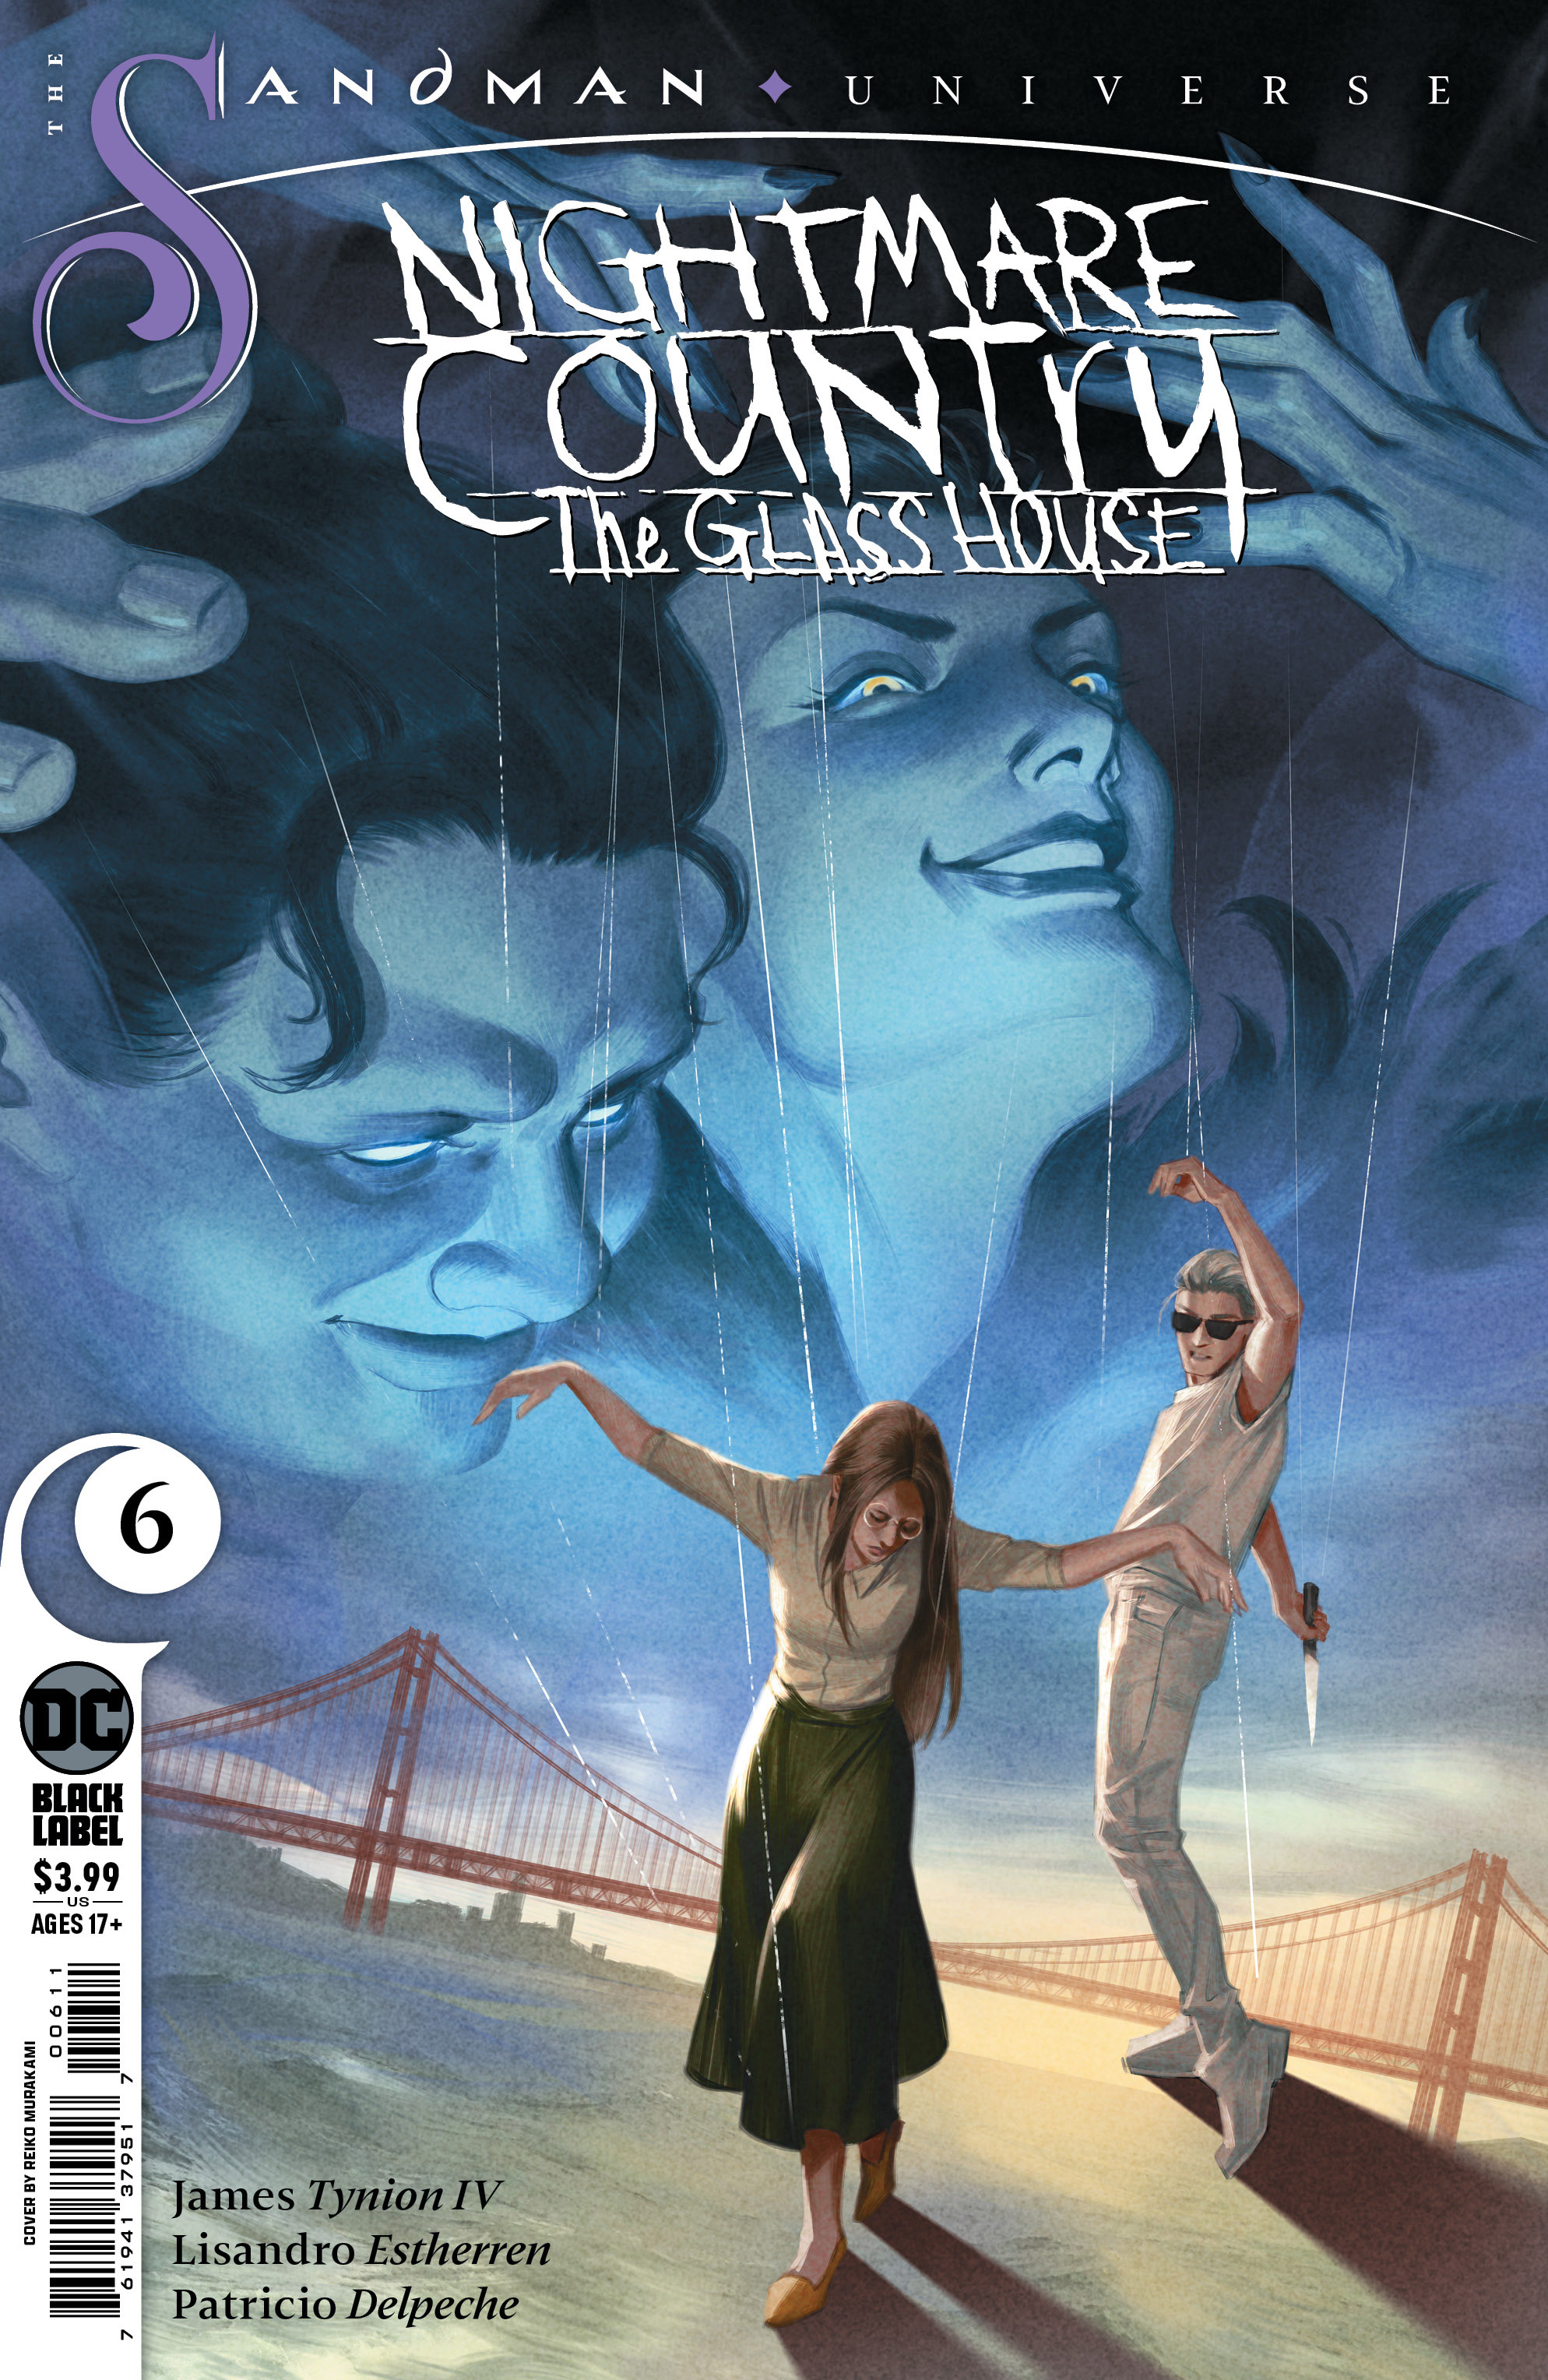 Sandman Universe Nightmare Country The Glass House #6 Cover A Reiko Murakami (Mature) (Of 6)